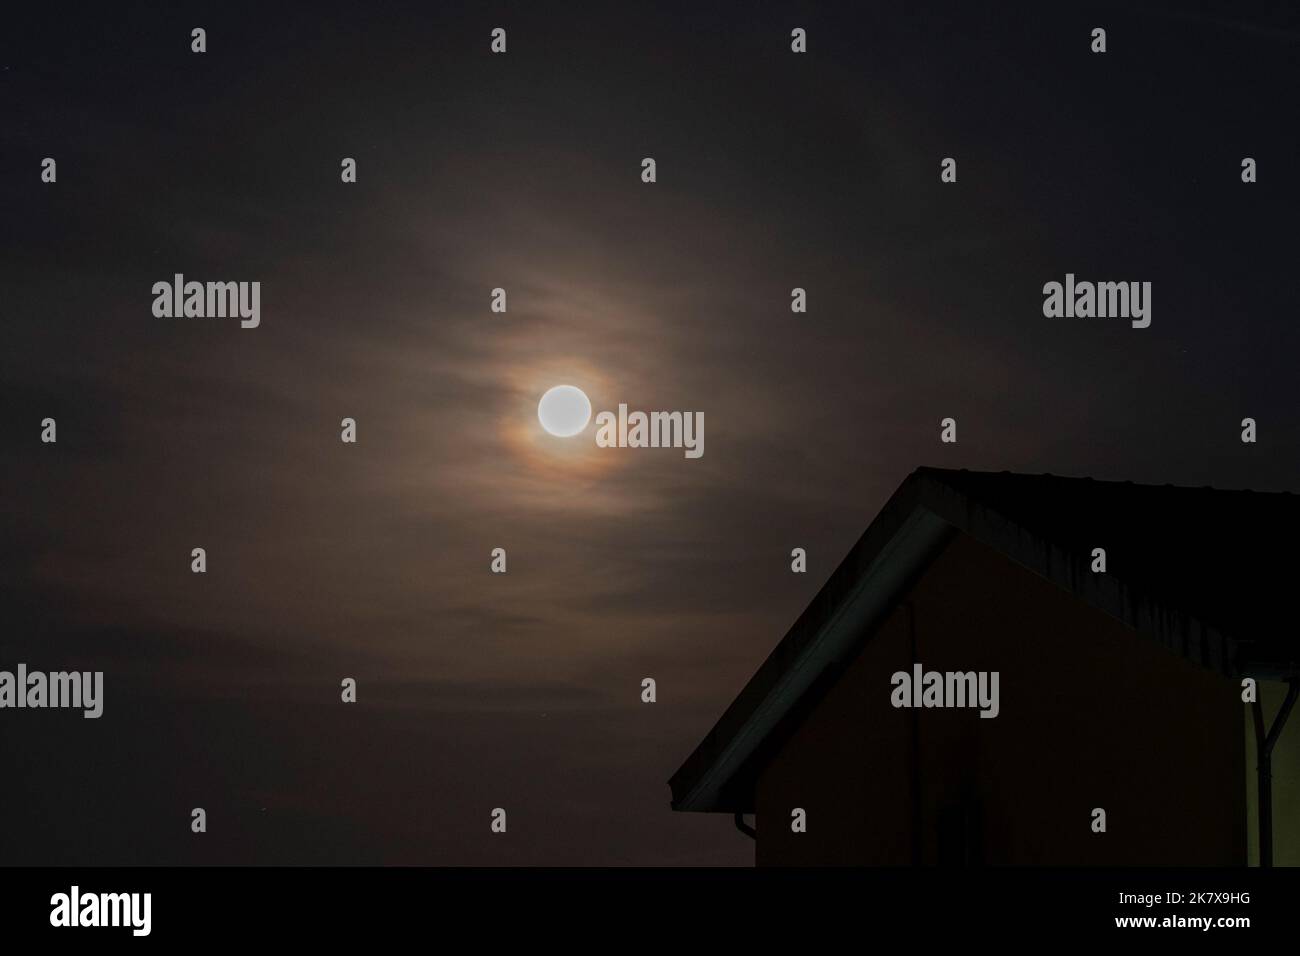 Shining moon in the cloudy sky Stock Photo